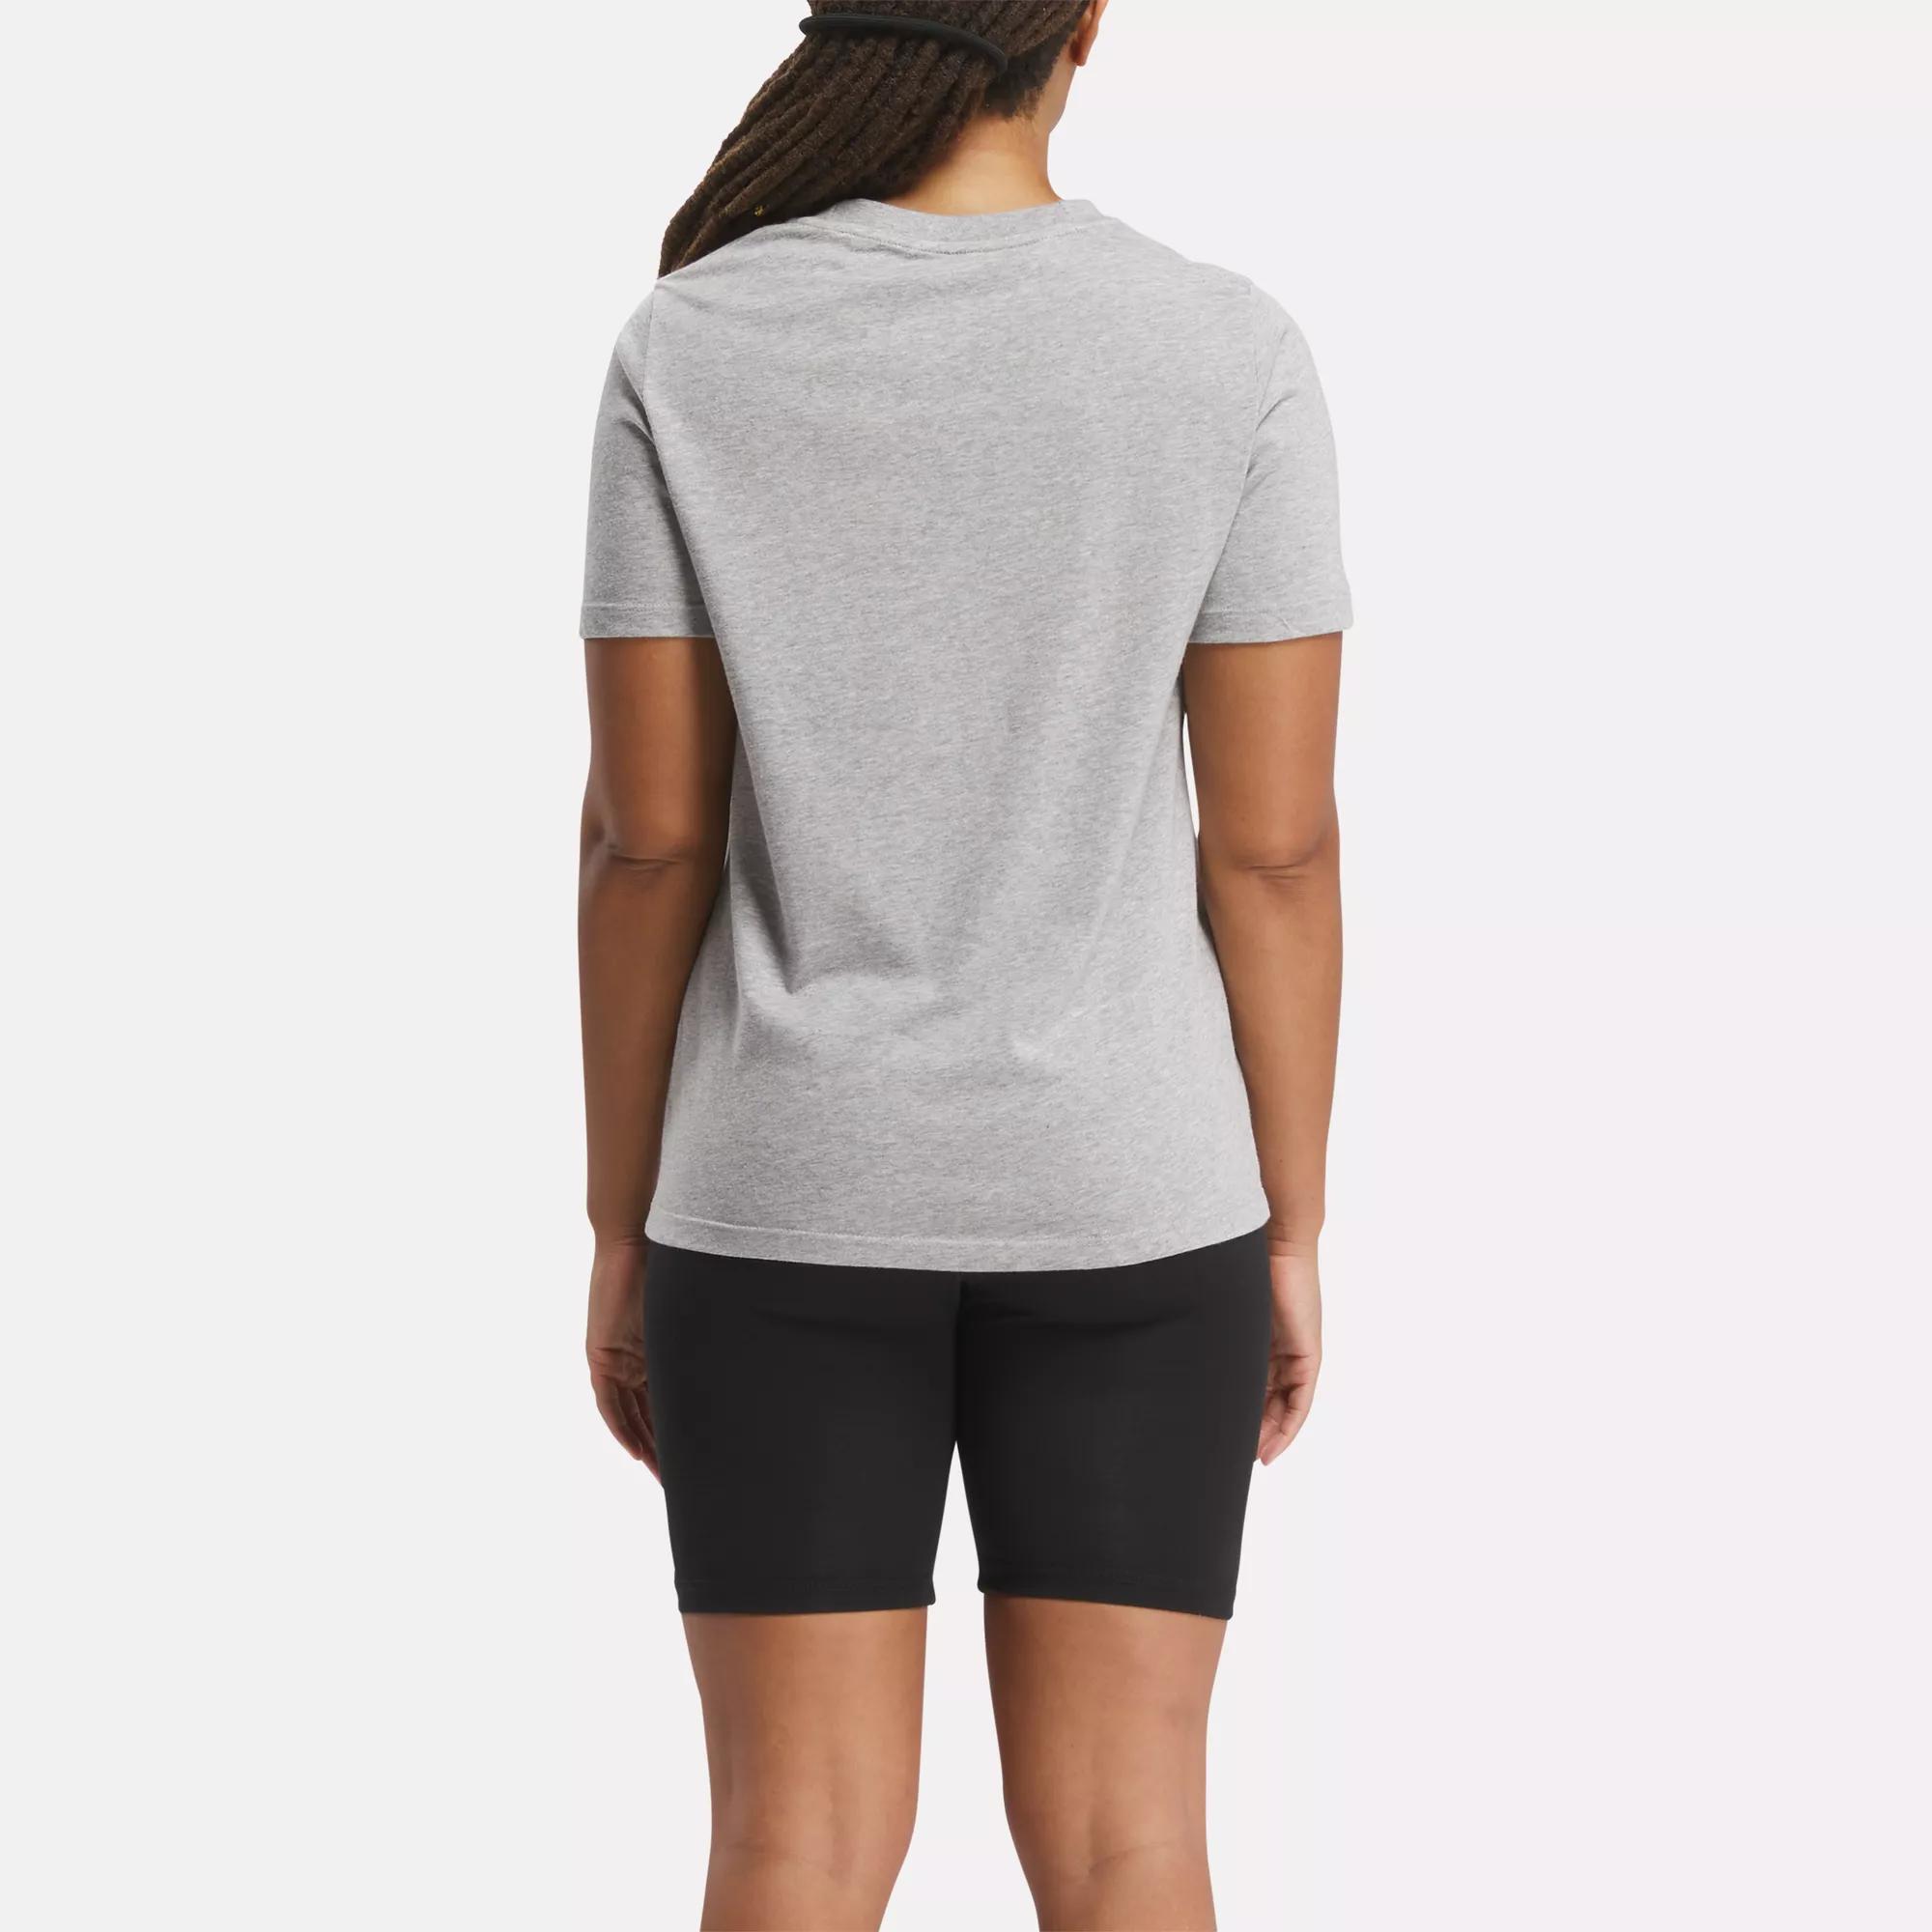 Reebok Identity T-Shirt - Grey Heather Medium Reebok 